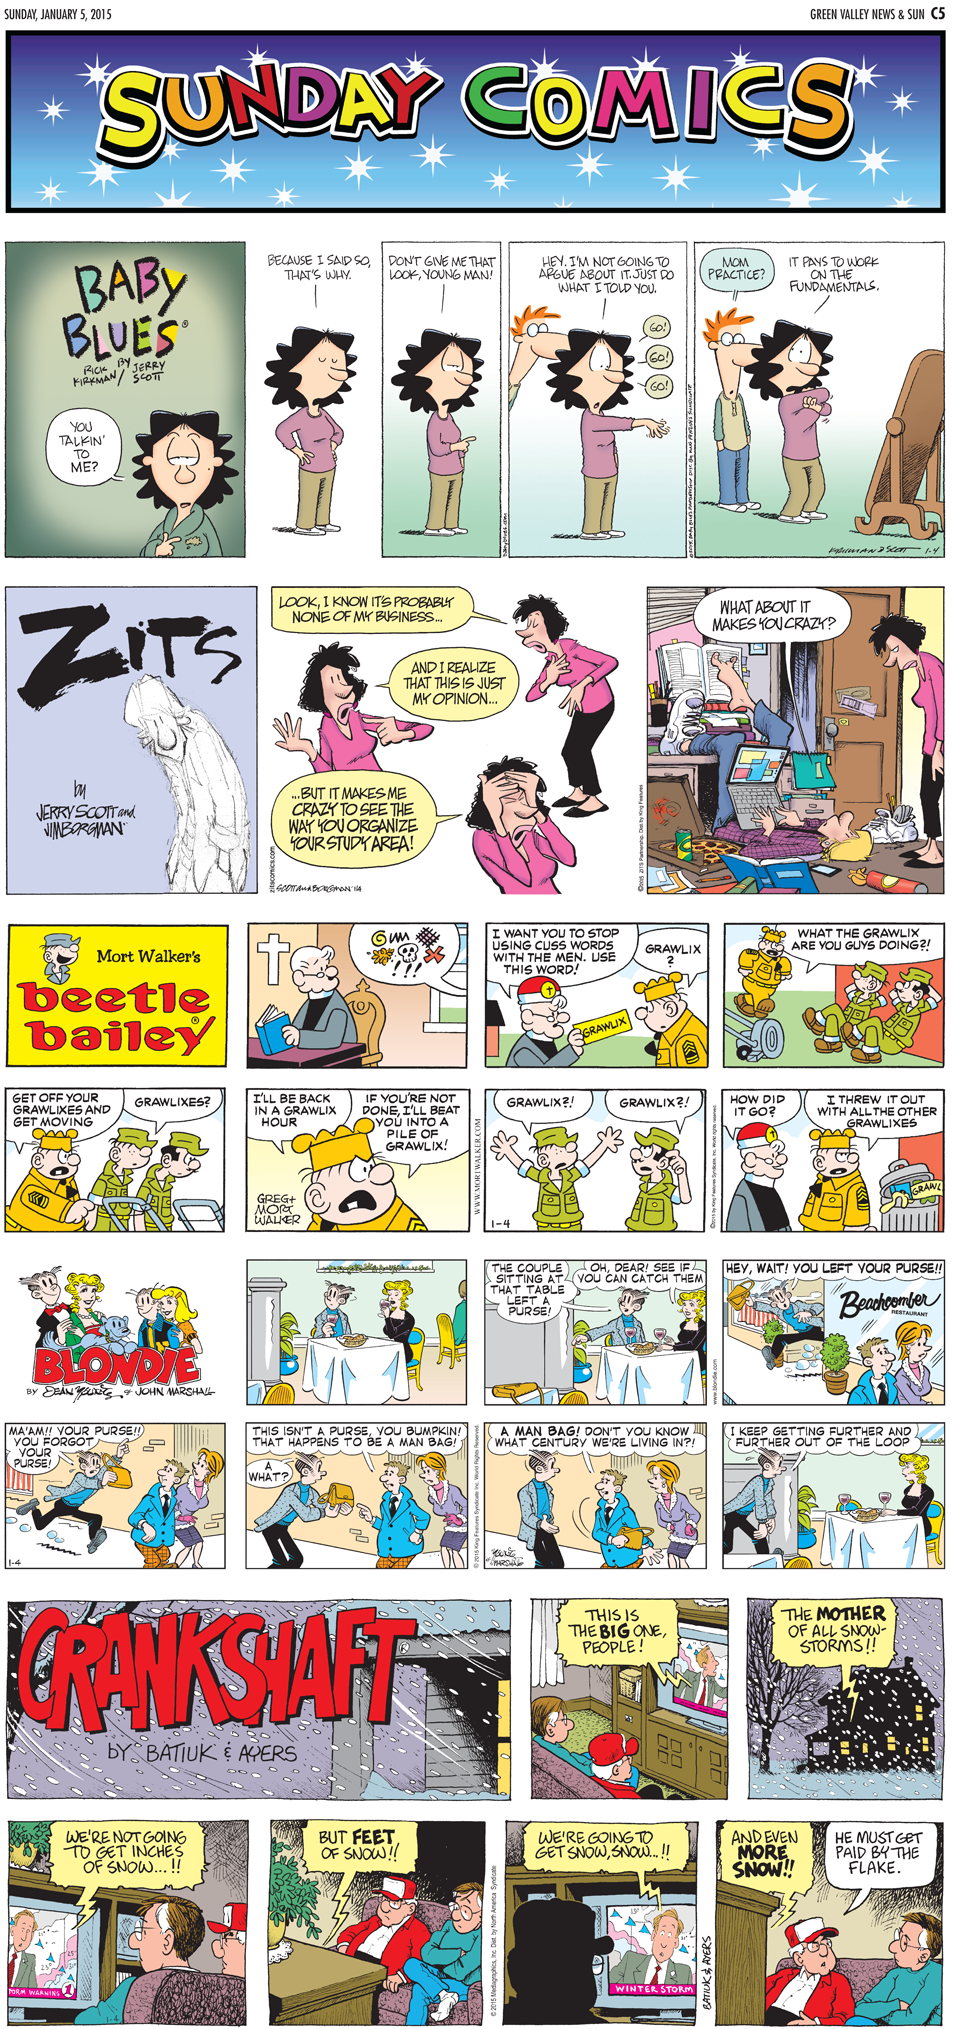 January 4, 2015: Sunday Comics, Part 1 - Green Valley News: Cartoons